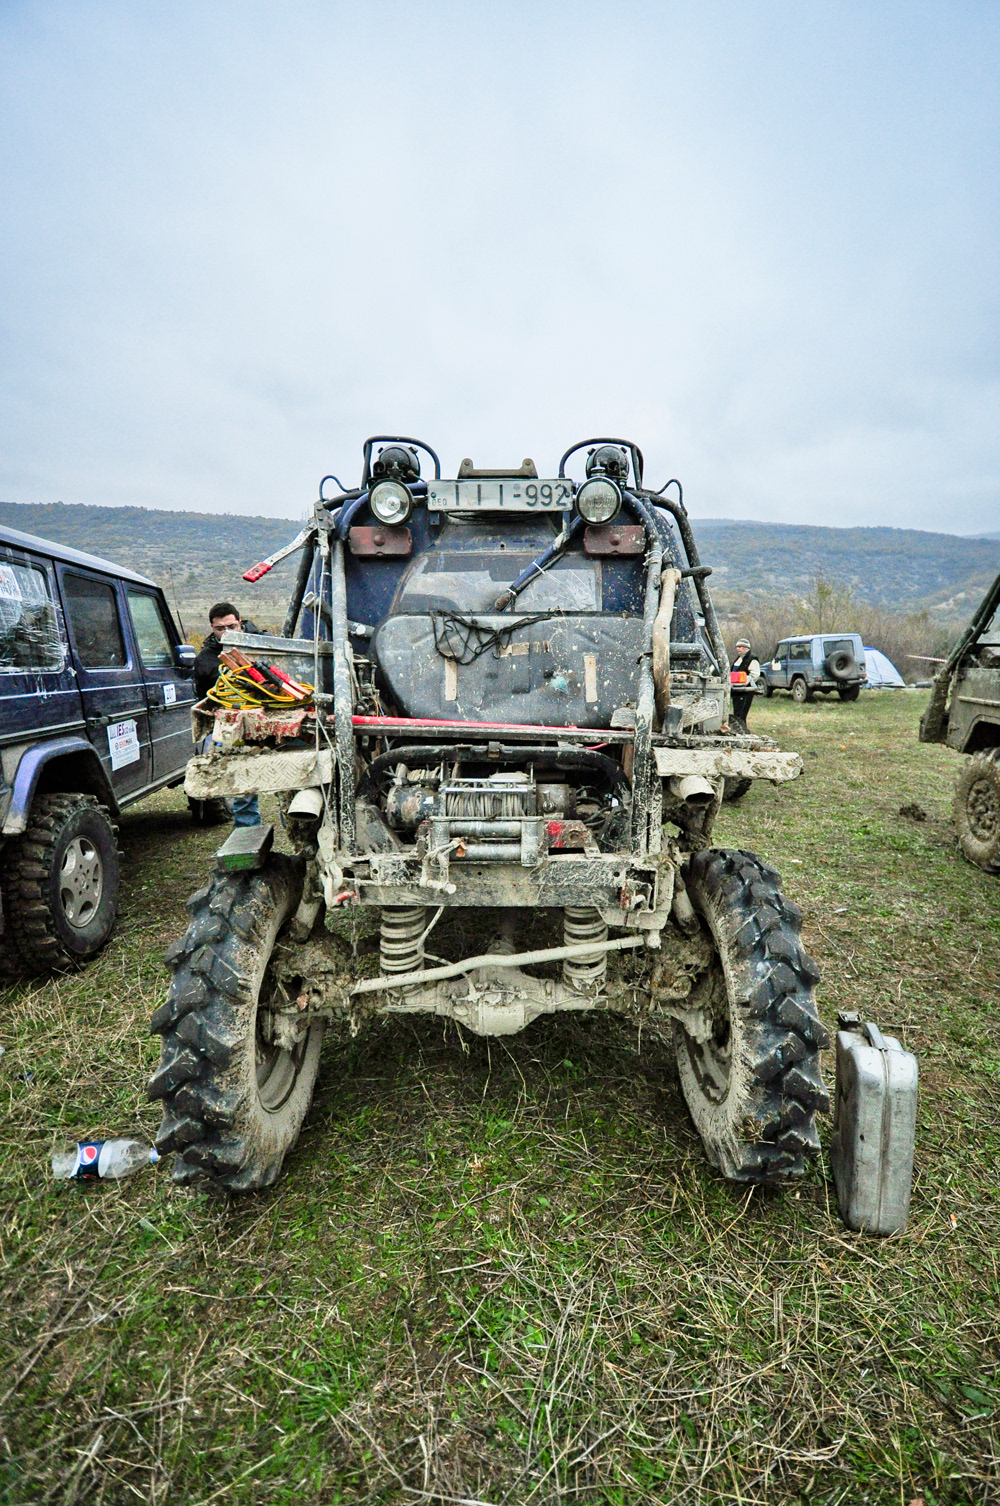 car Off-Road mud challenge 4x4 monster Wrangler